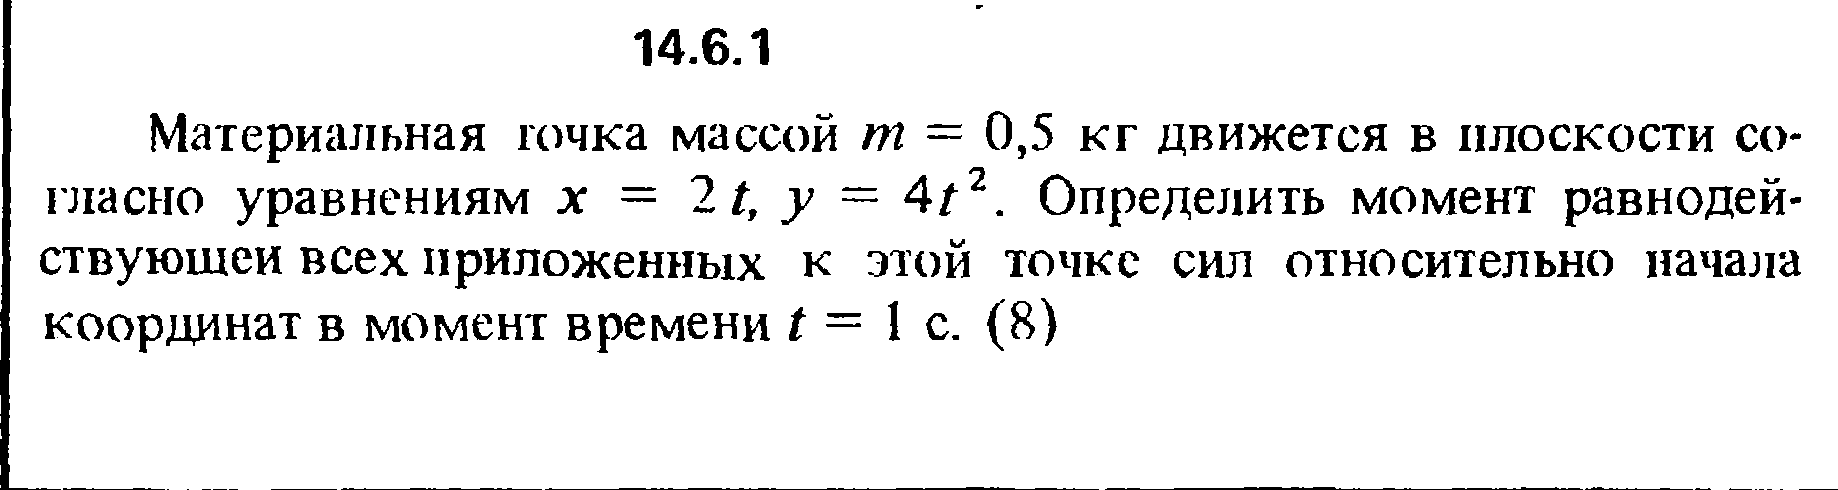 Решение задачи 14.6.1 из сборника Кепе О.Е. 1989 года